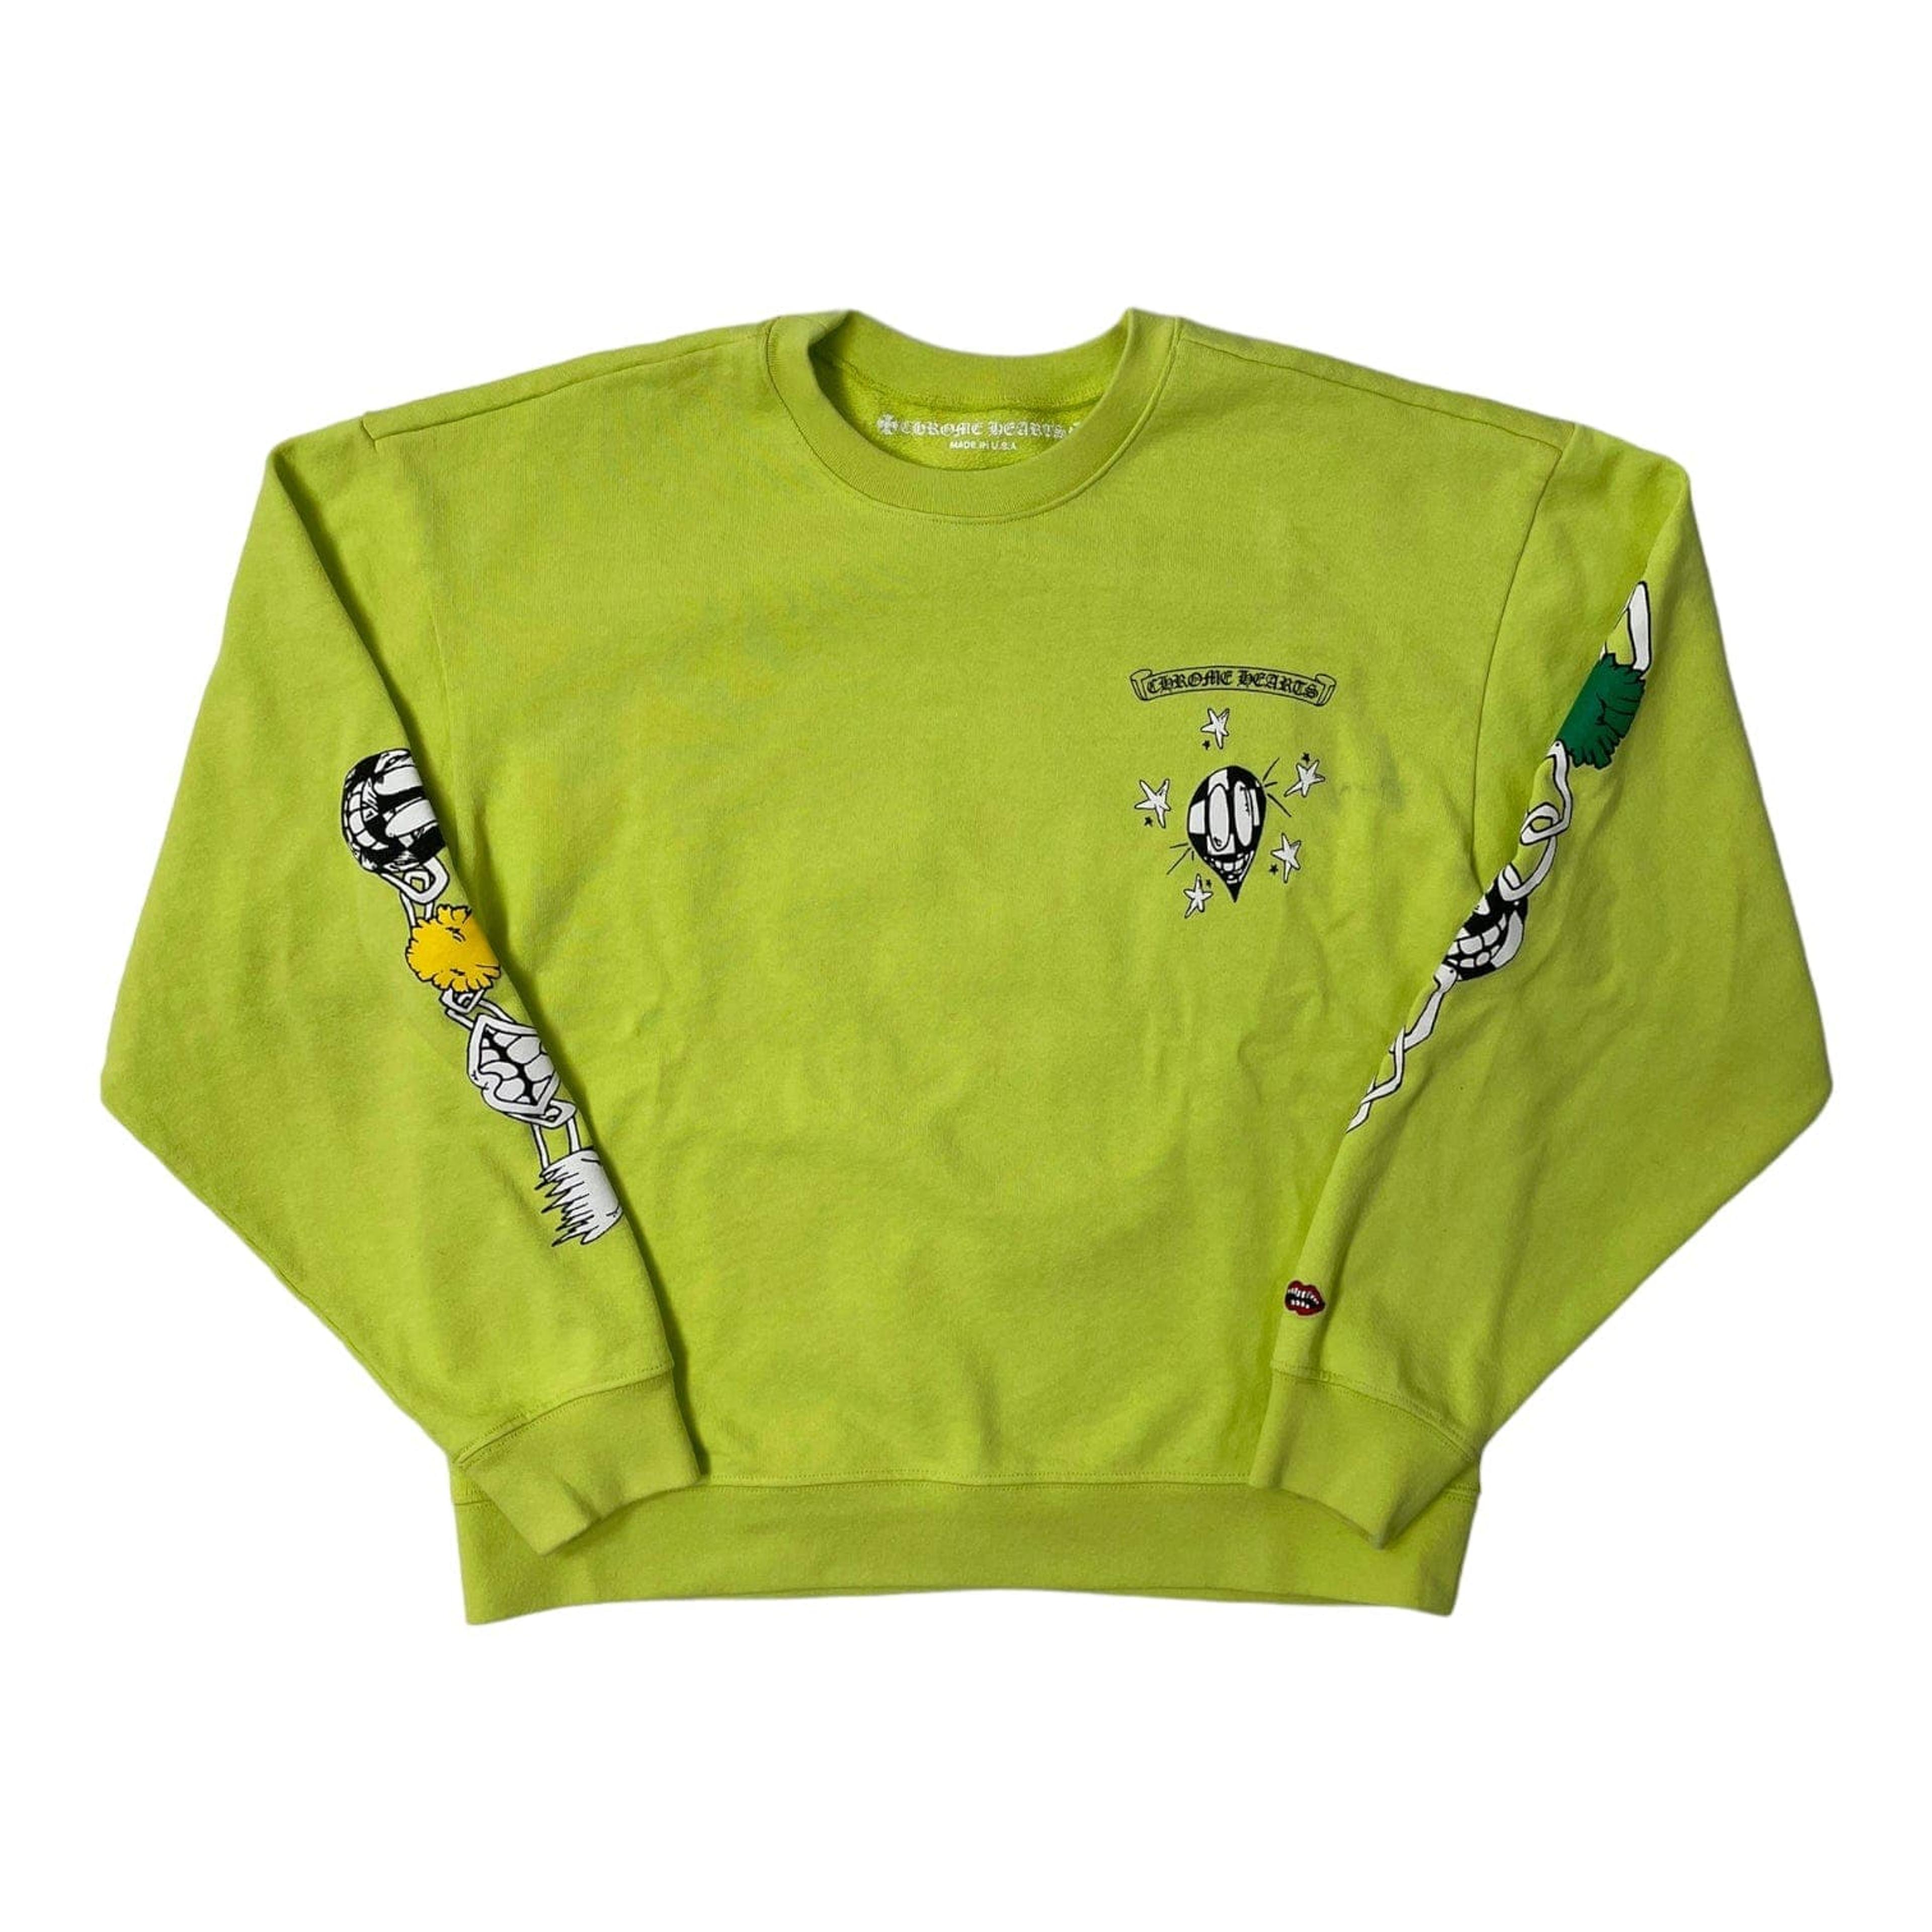 Chrome Hearts Matty Boy Link Crewneck Sweatshirt Lime Green Pre-